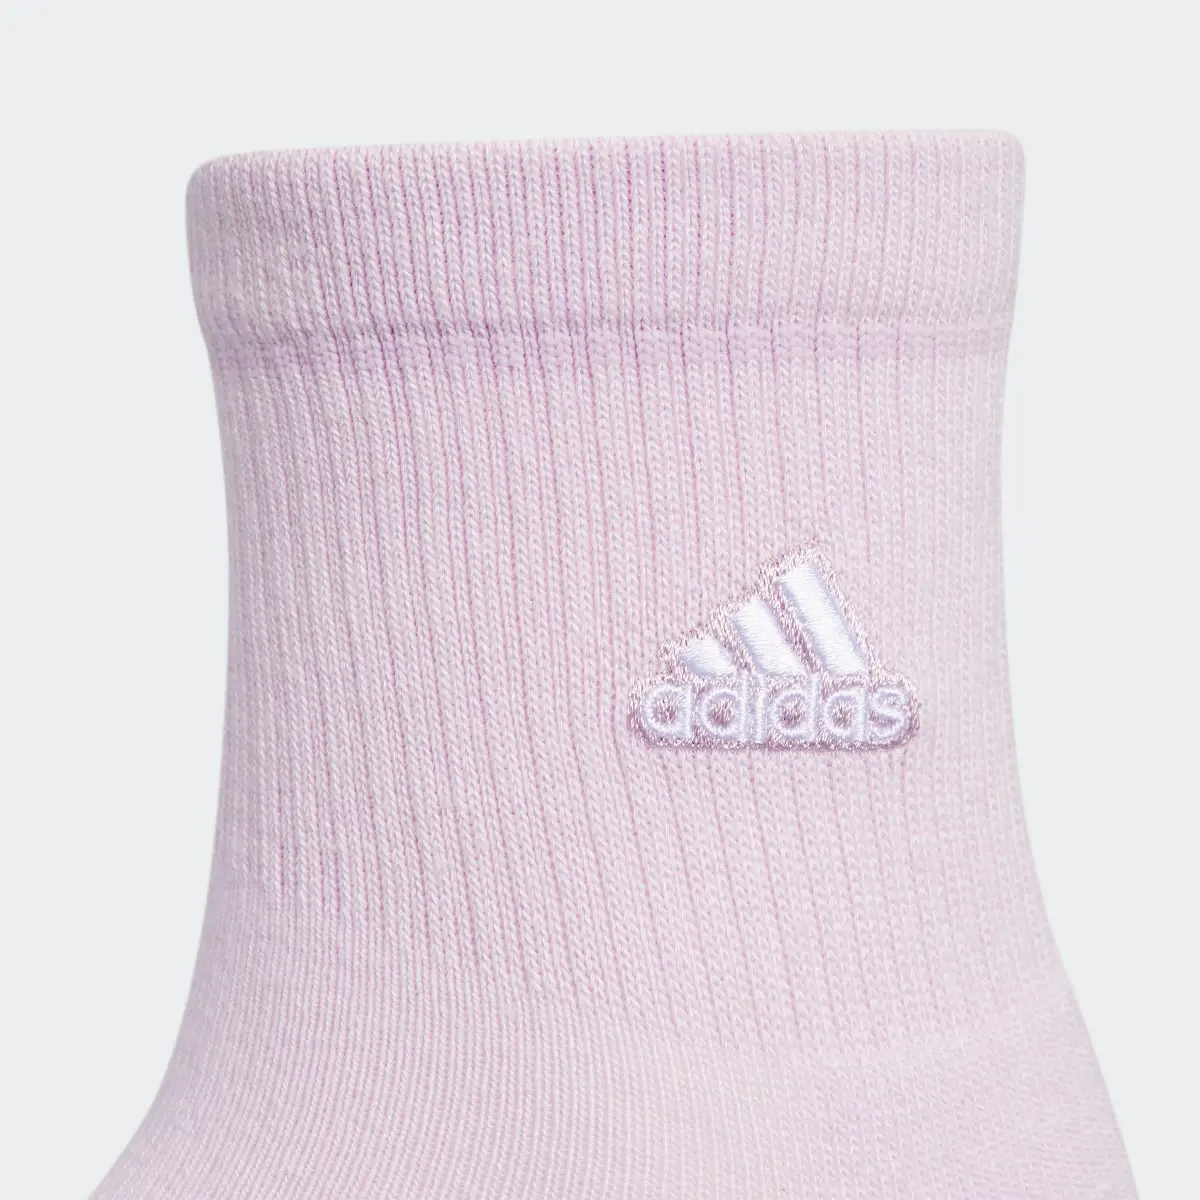 Adidas Cushioned Sport High-Quarter Socks 3-Pack. 3